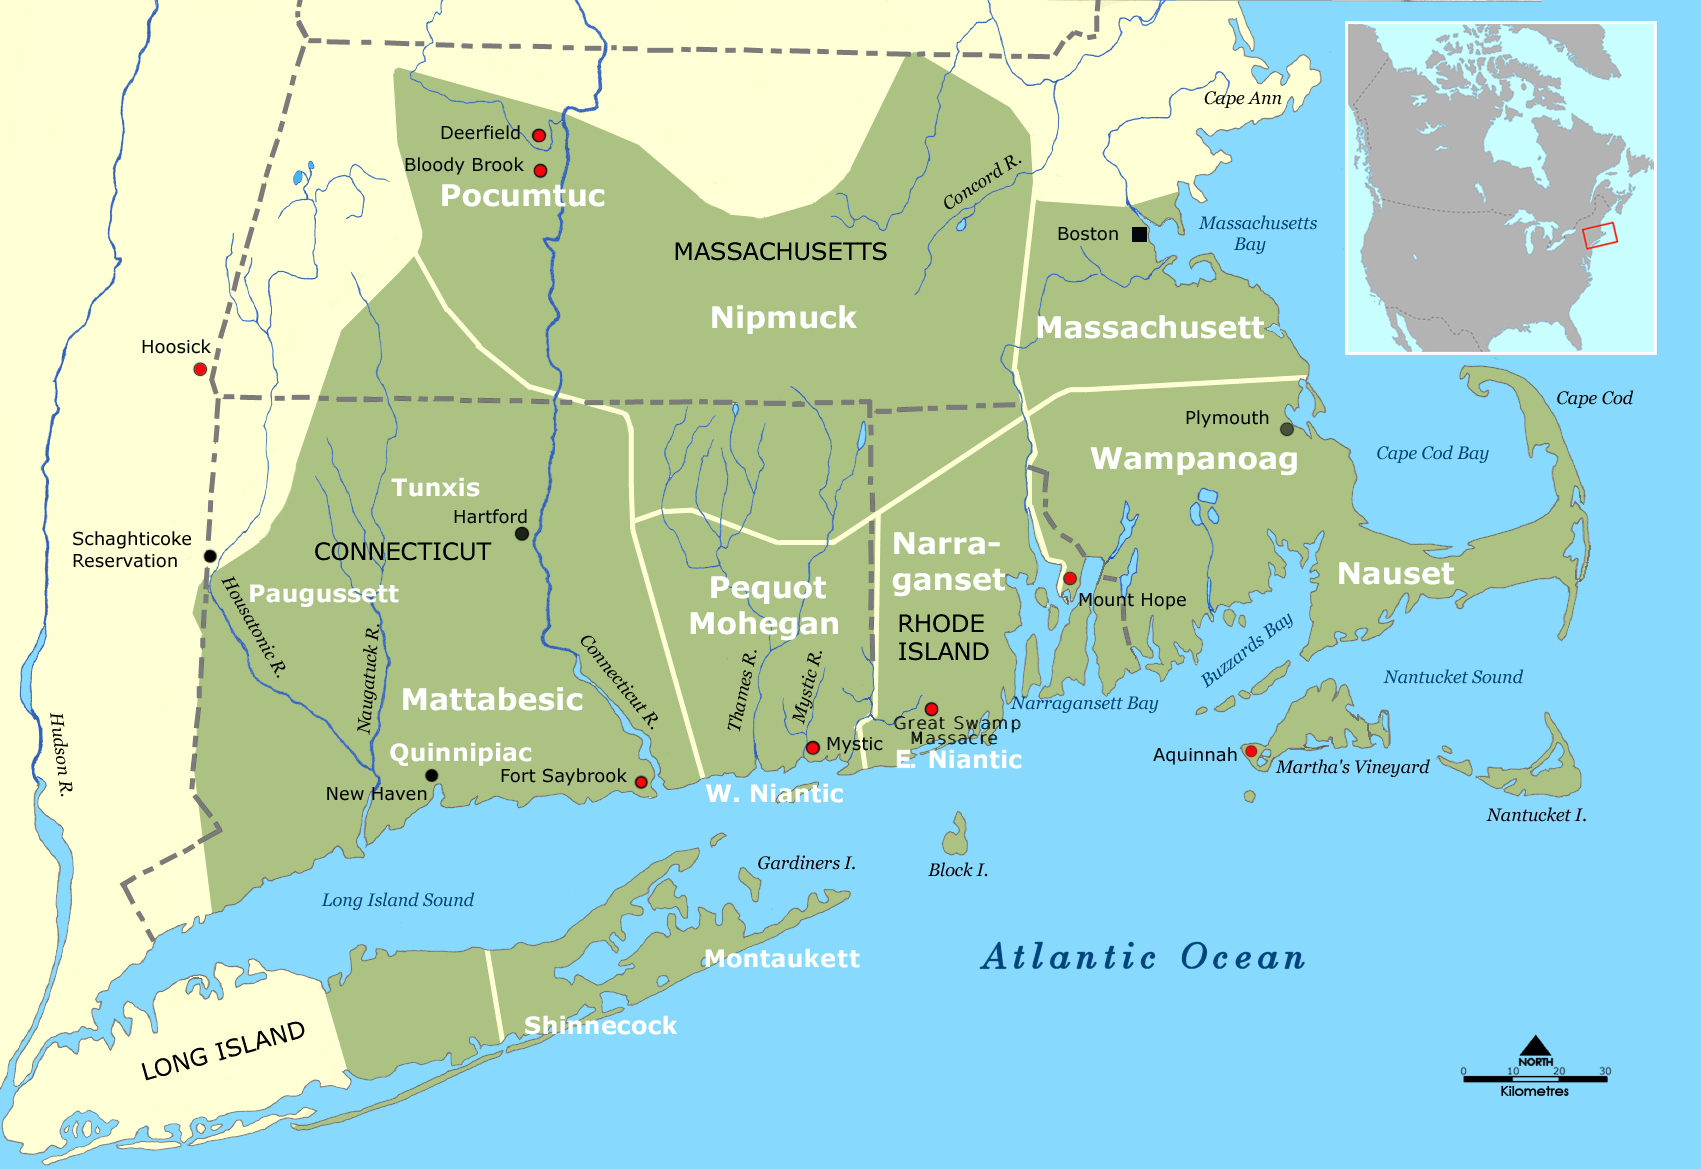 Indian territory in Massachusetts